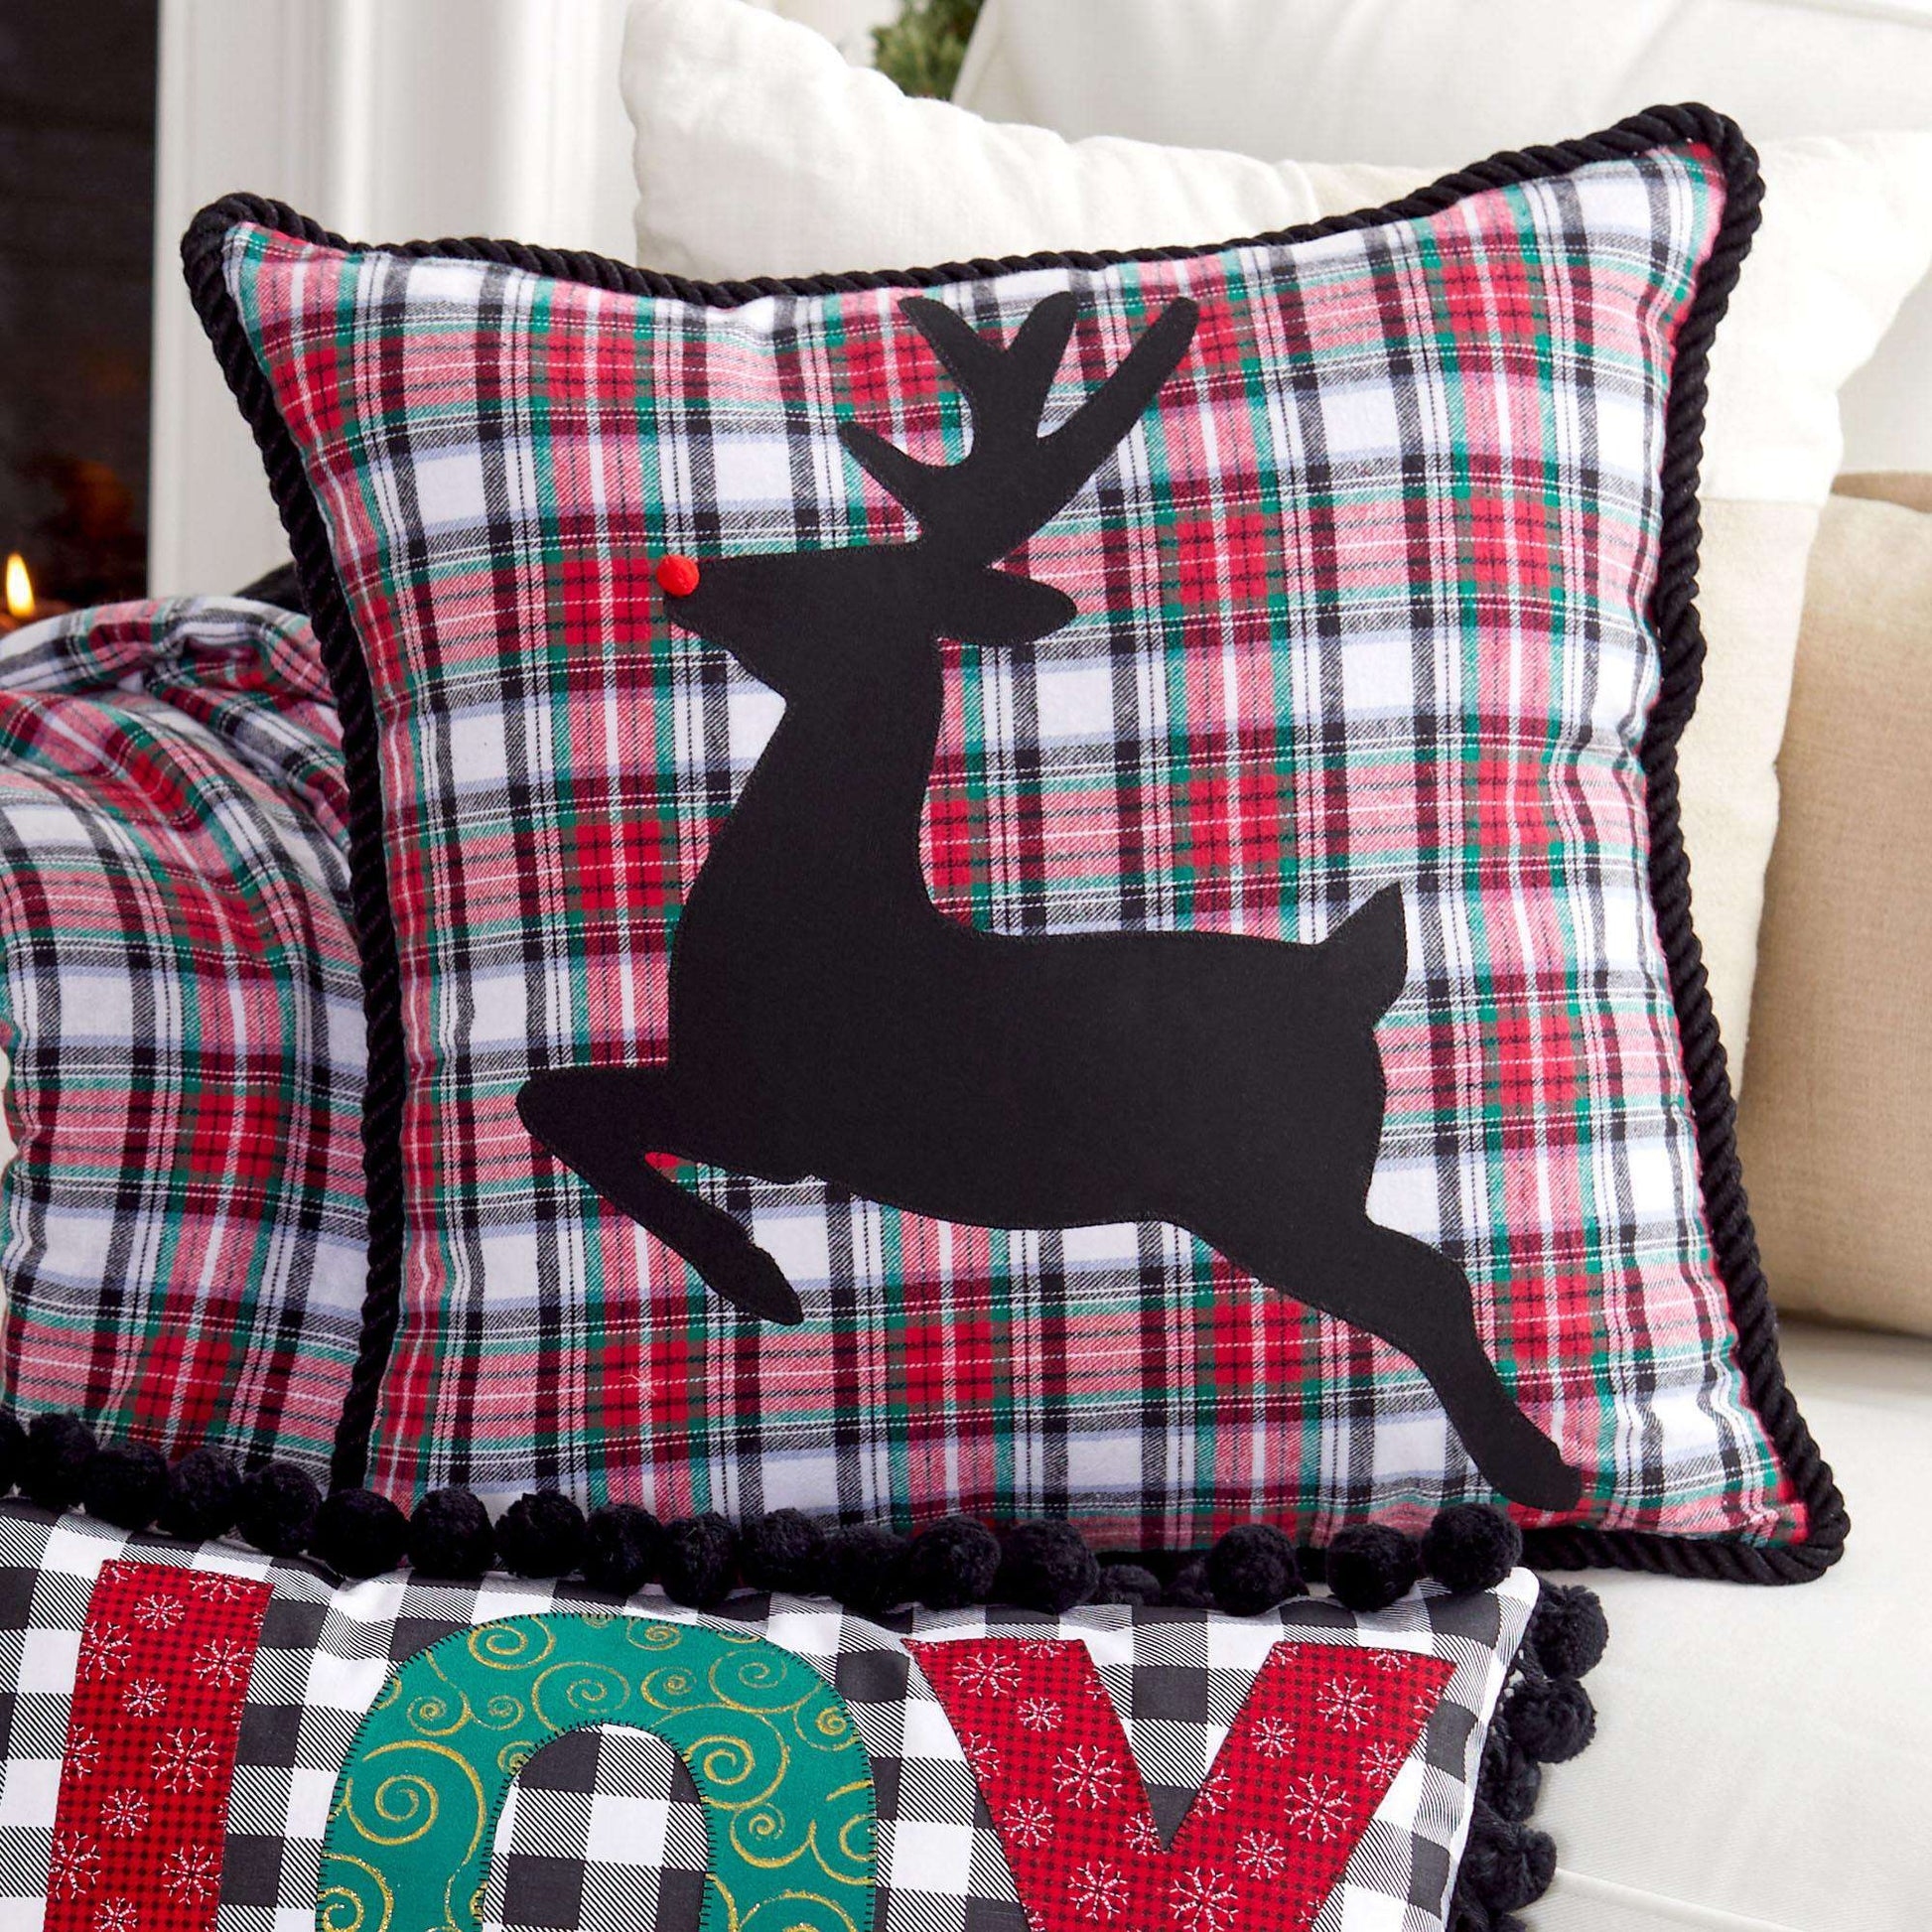 Free Coats & Clark Sewing Oh Deer Pillow Pattern